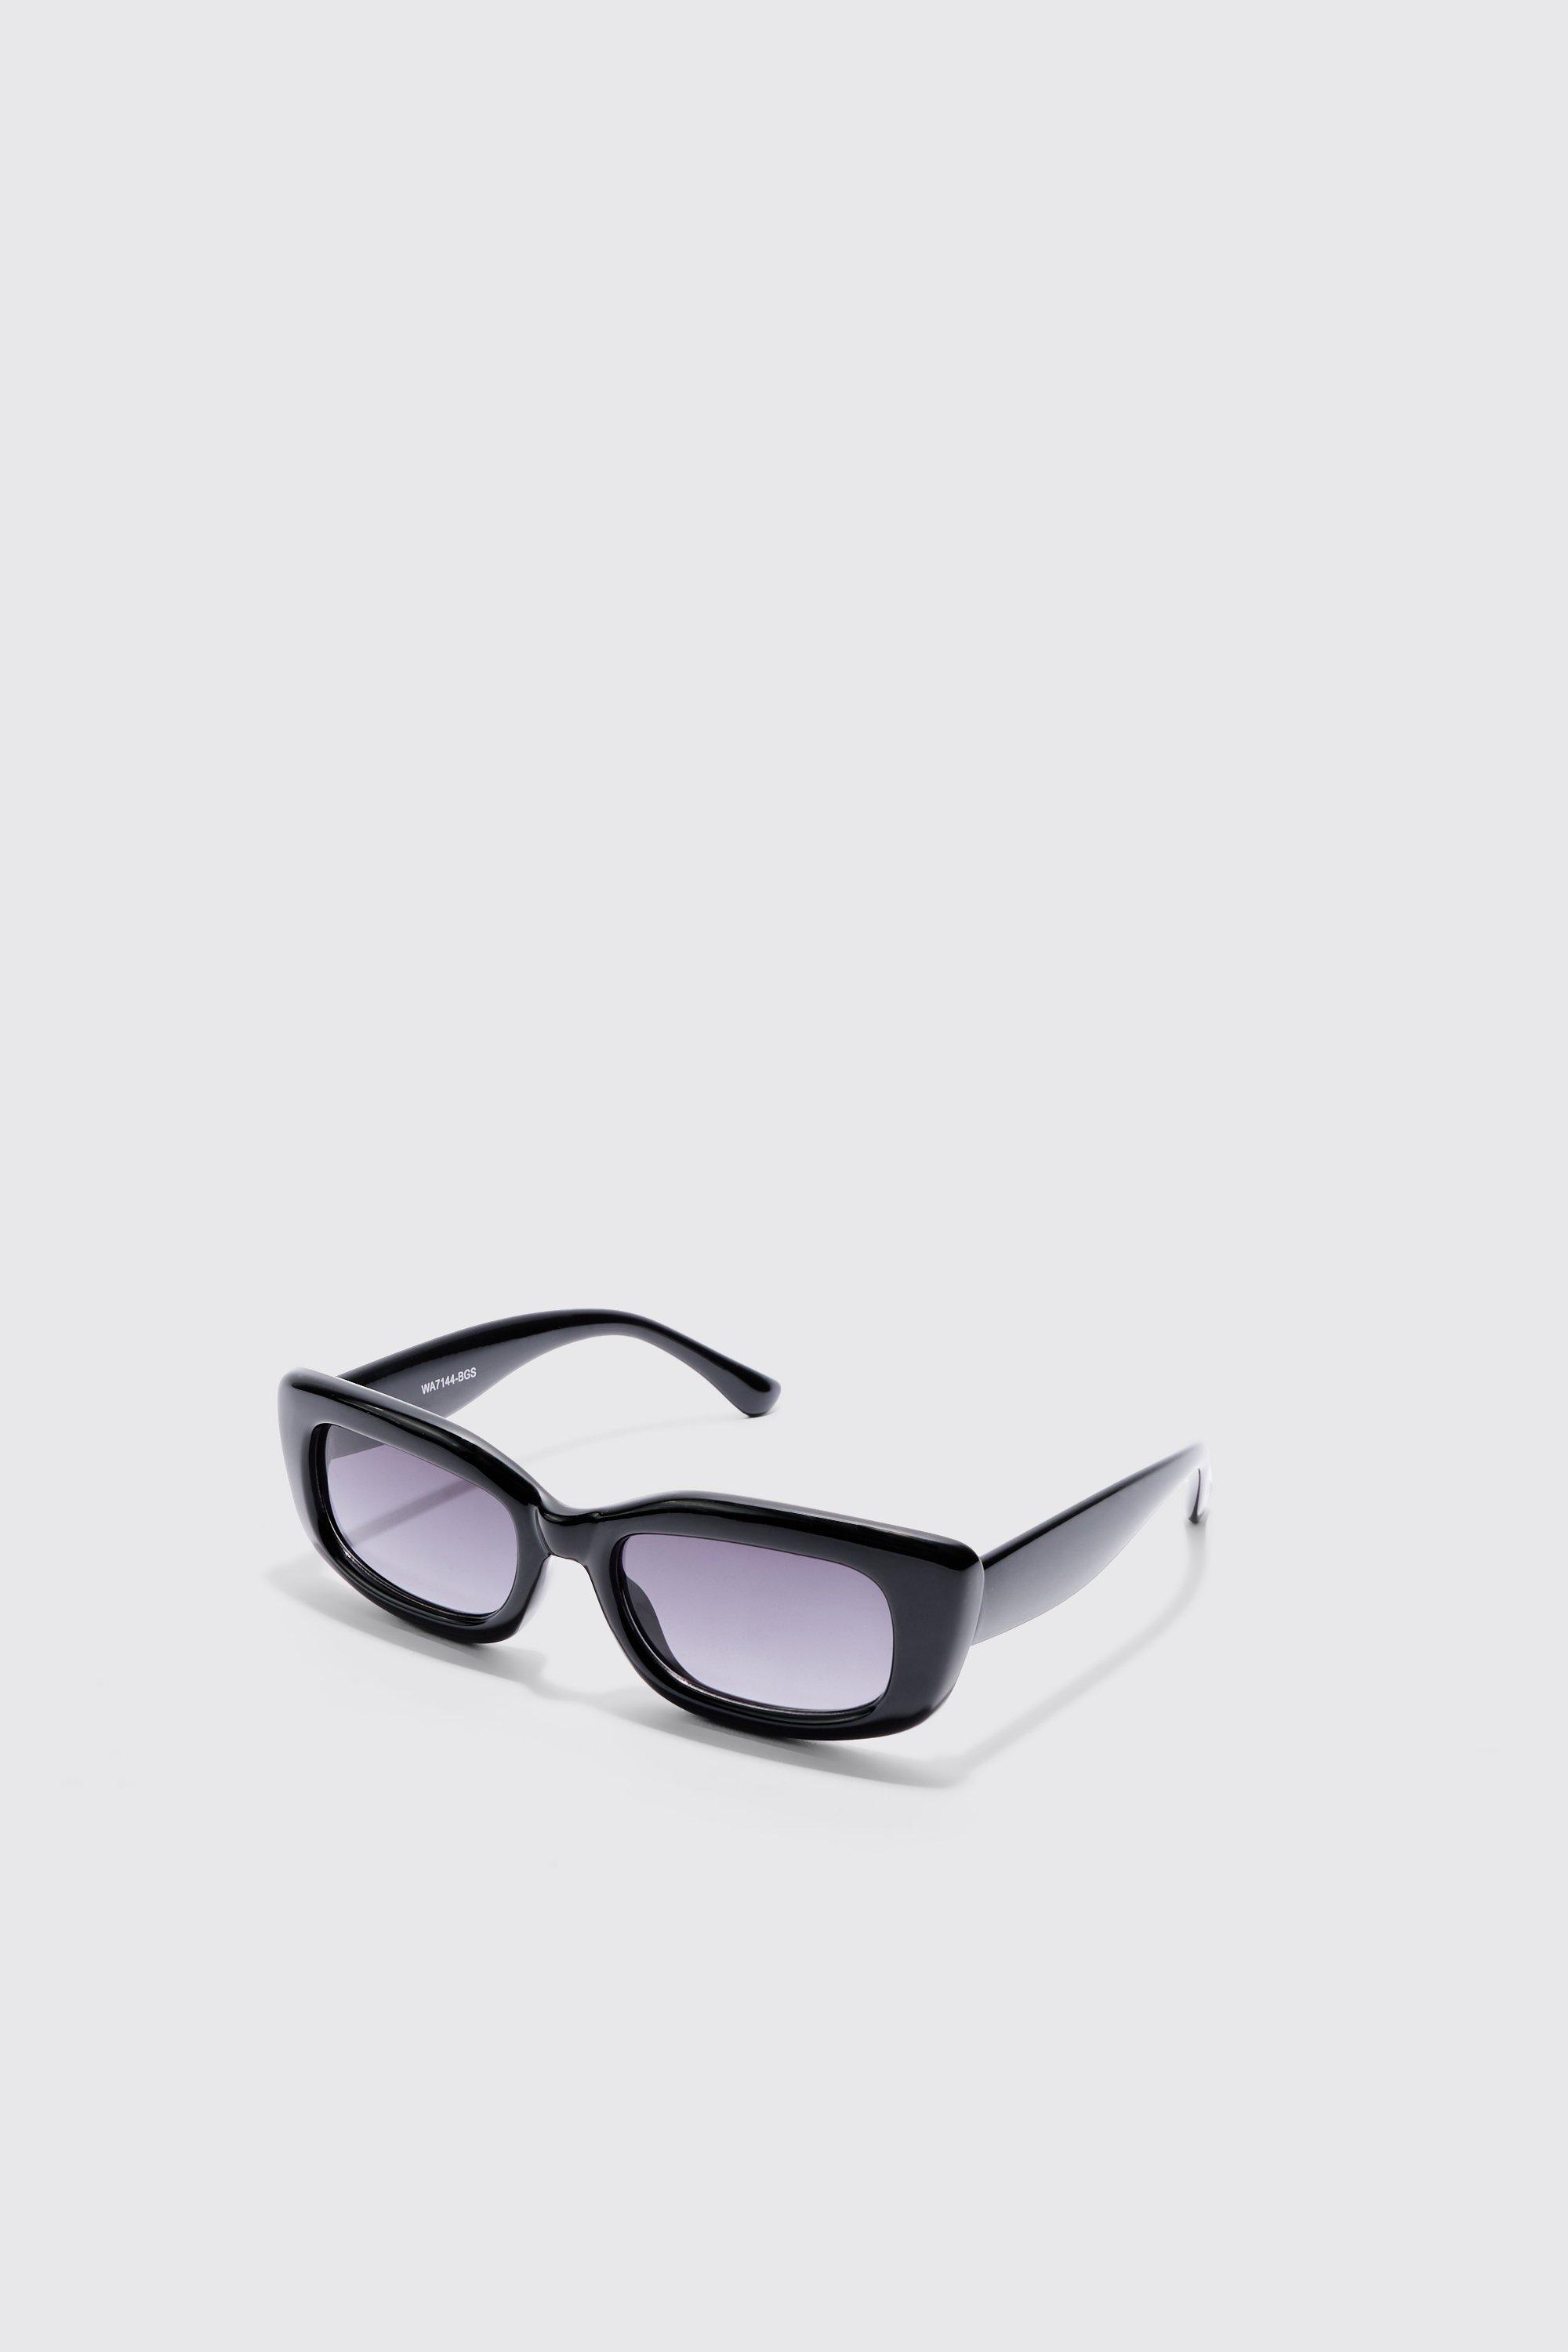 Image of Rectangle Plastic Sunglasses In Black, Nero